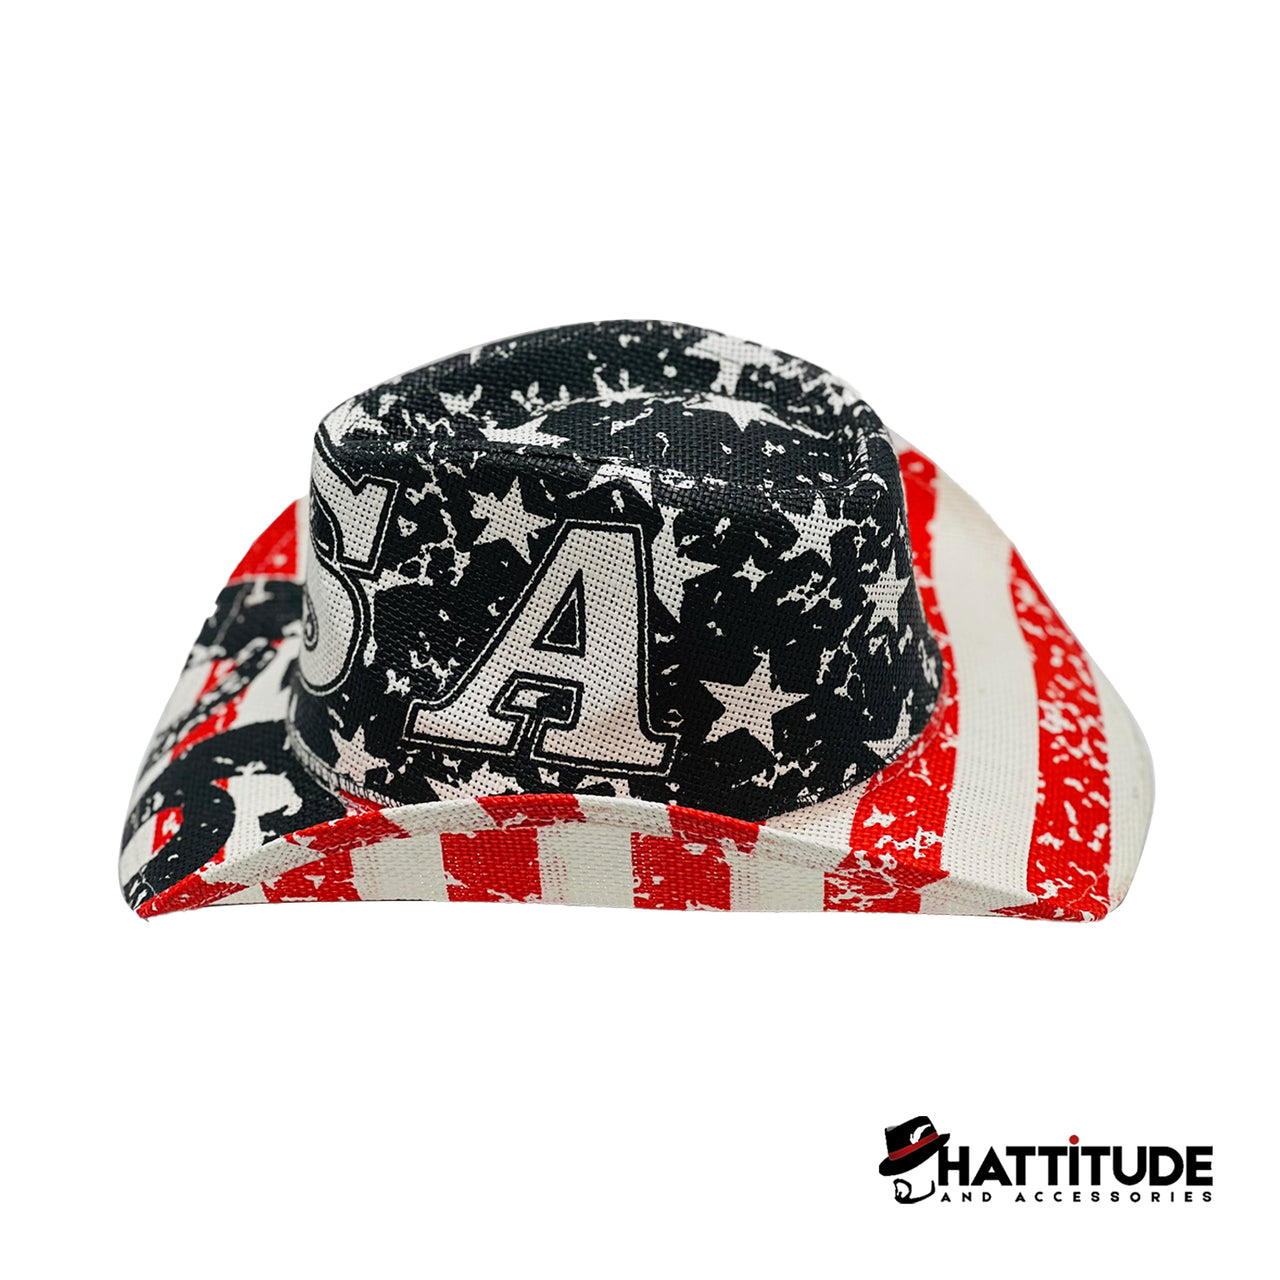 USA - Hattitude